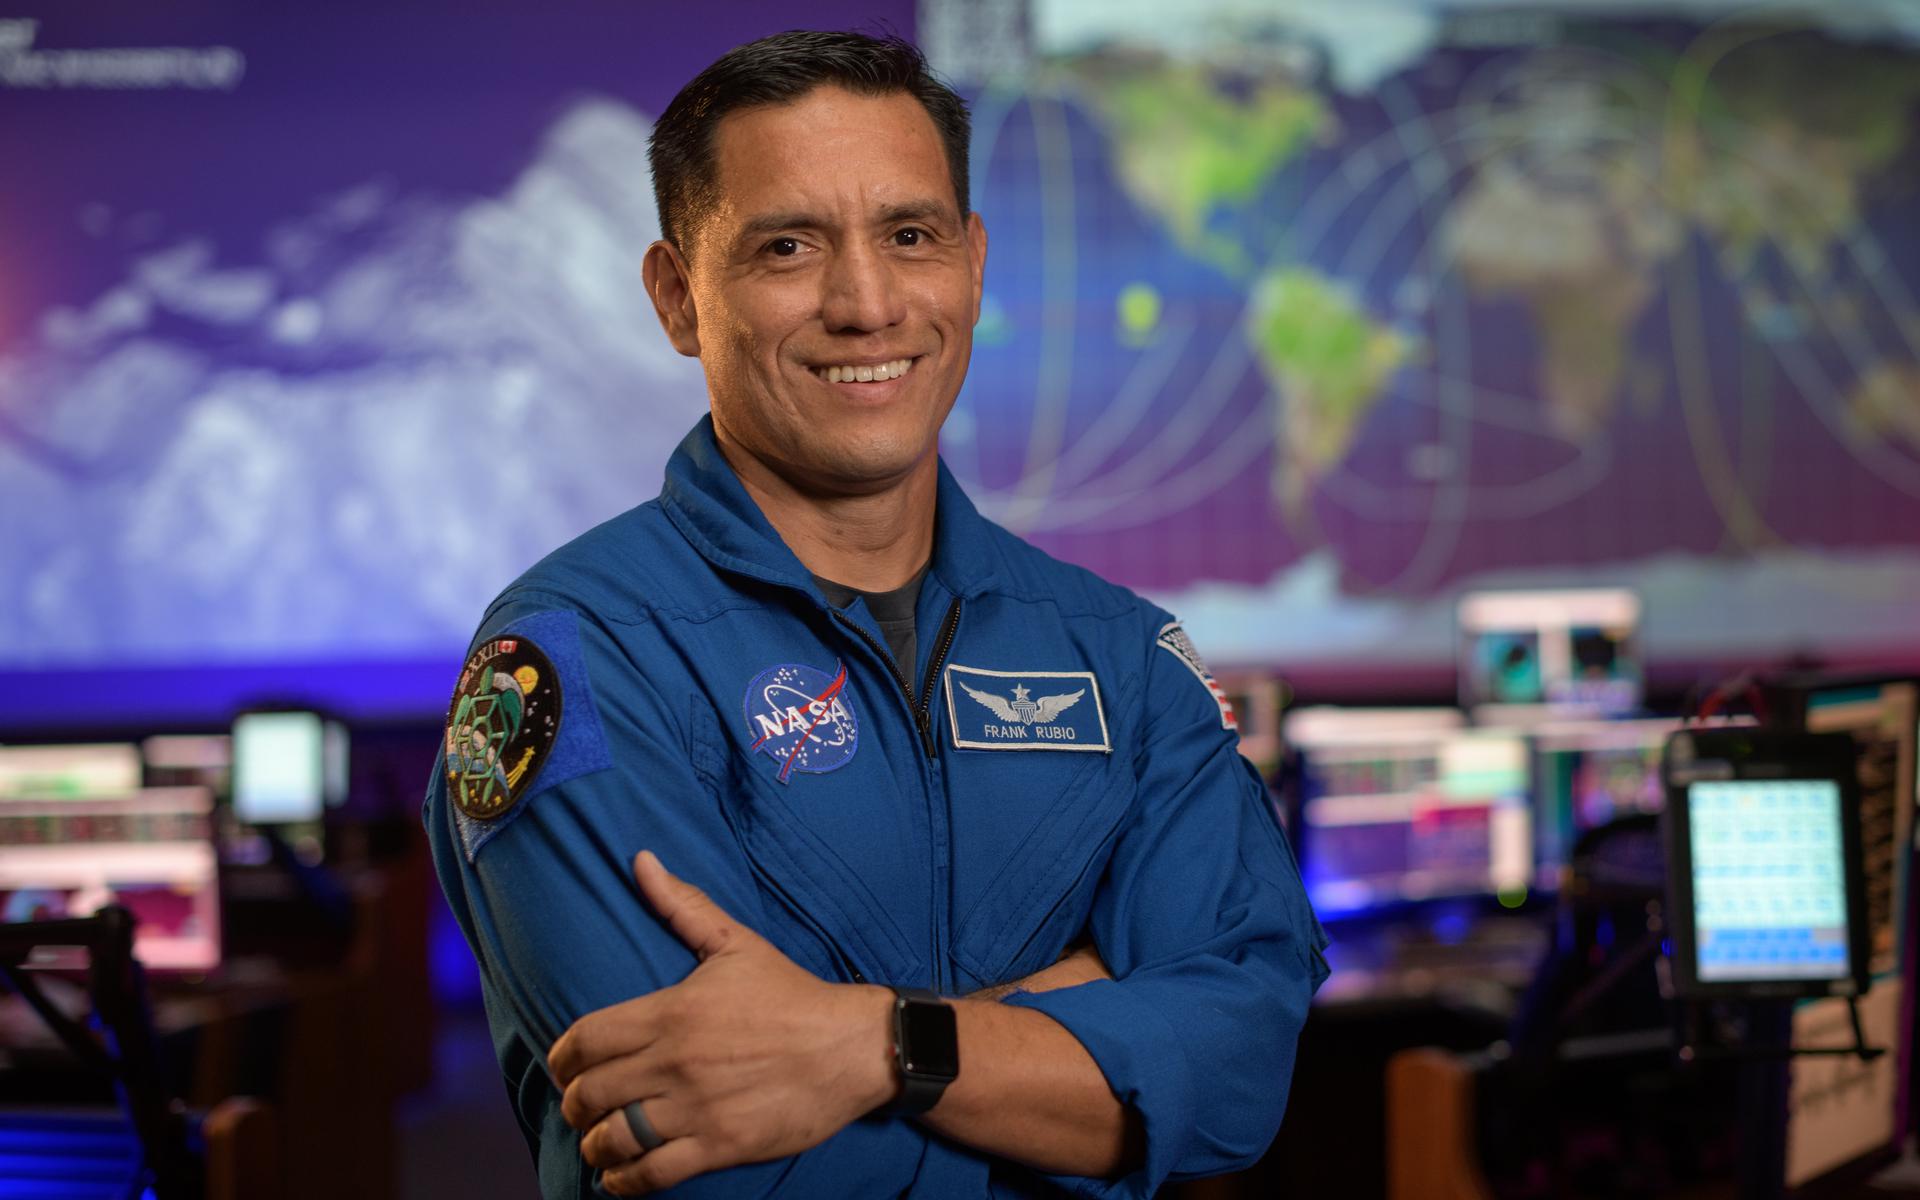 NASA Astronaut: Frank Rubio - NASA